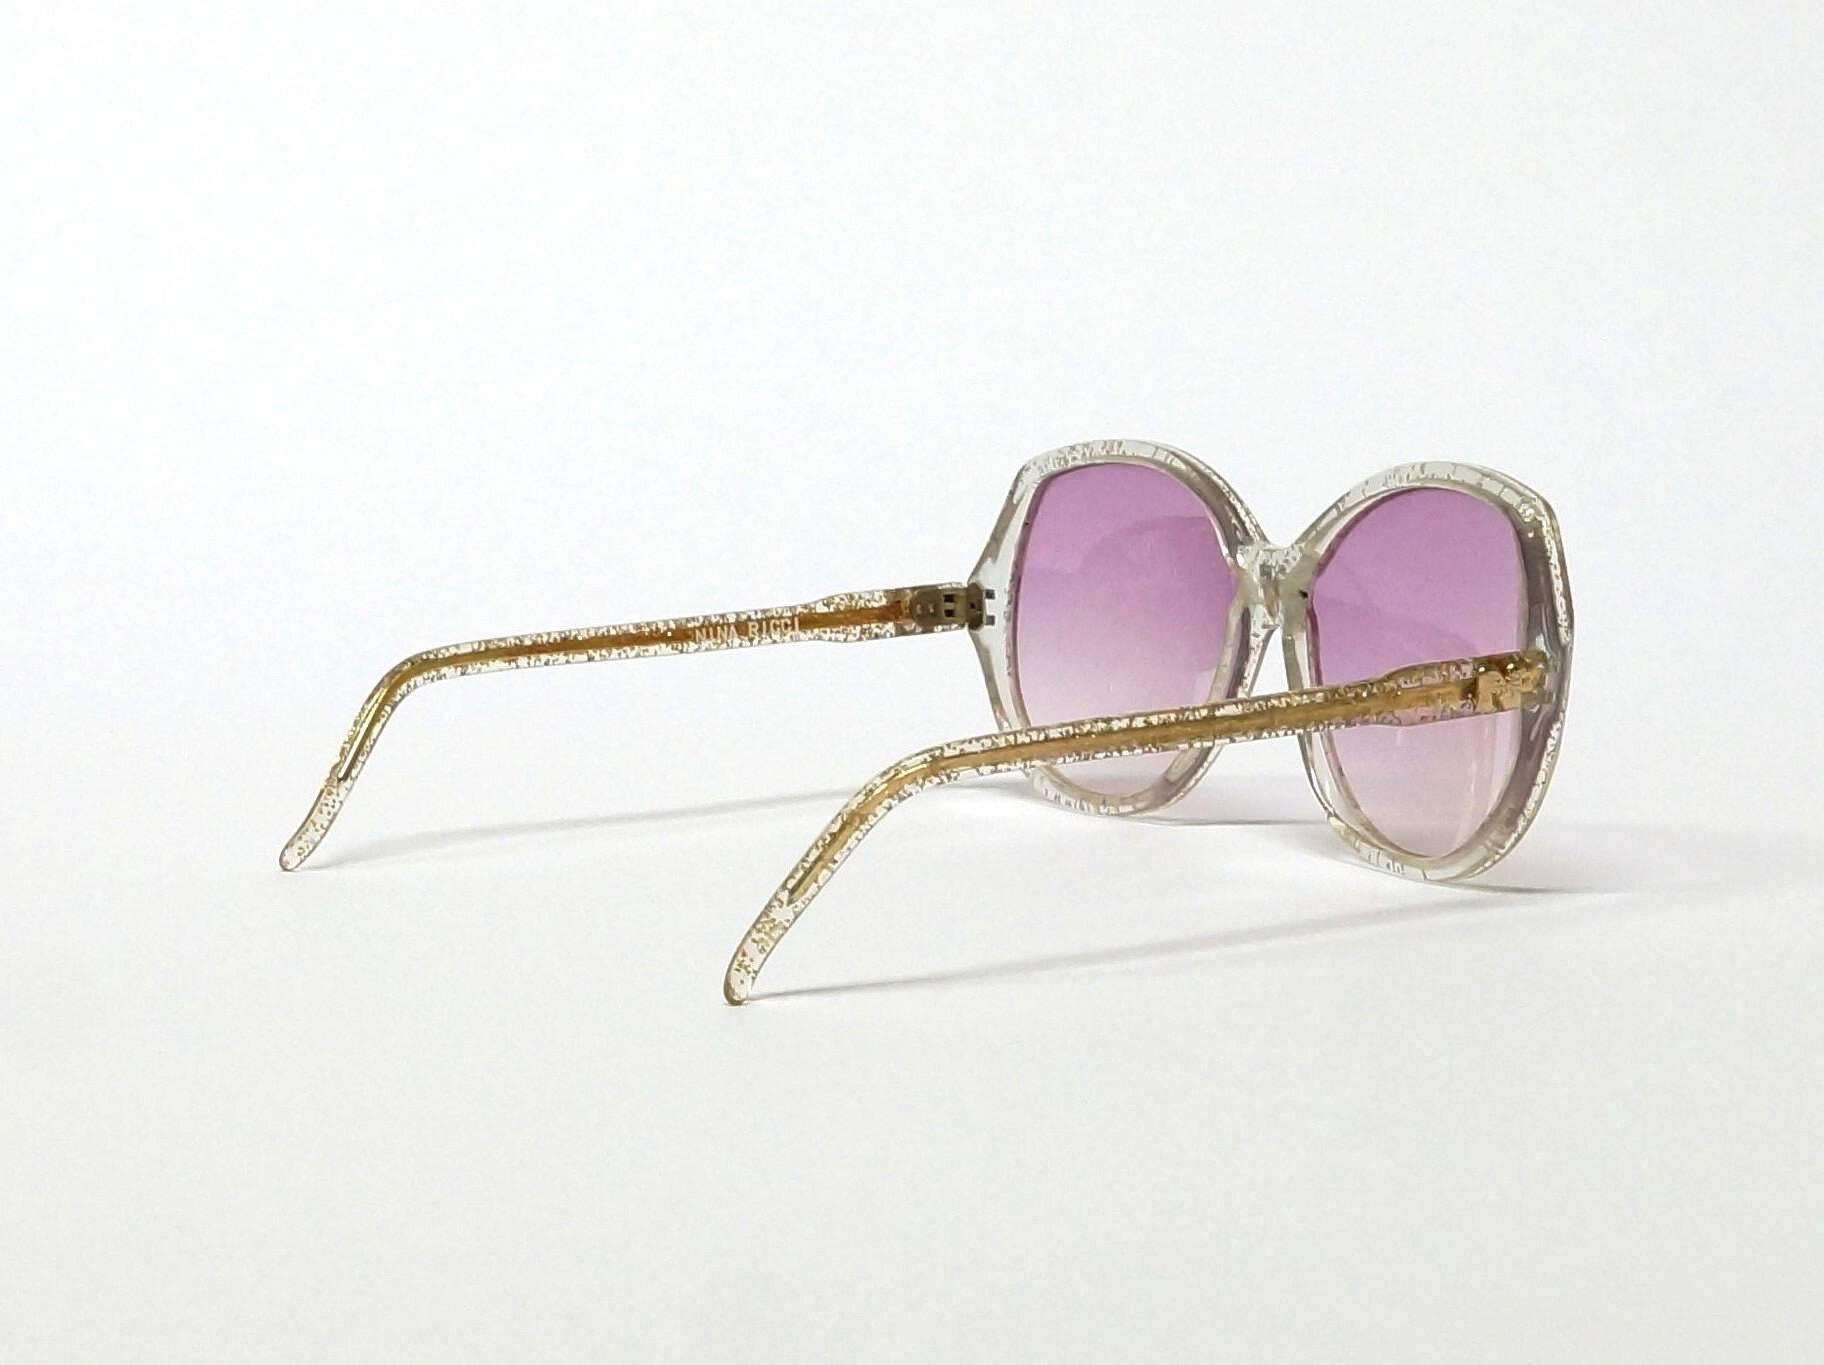 Women's Nina Ricci Gold and Glitter Vintage Sunglasses For Sale